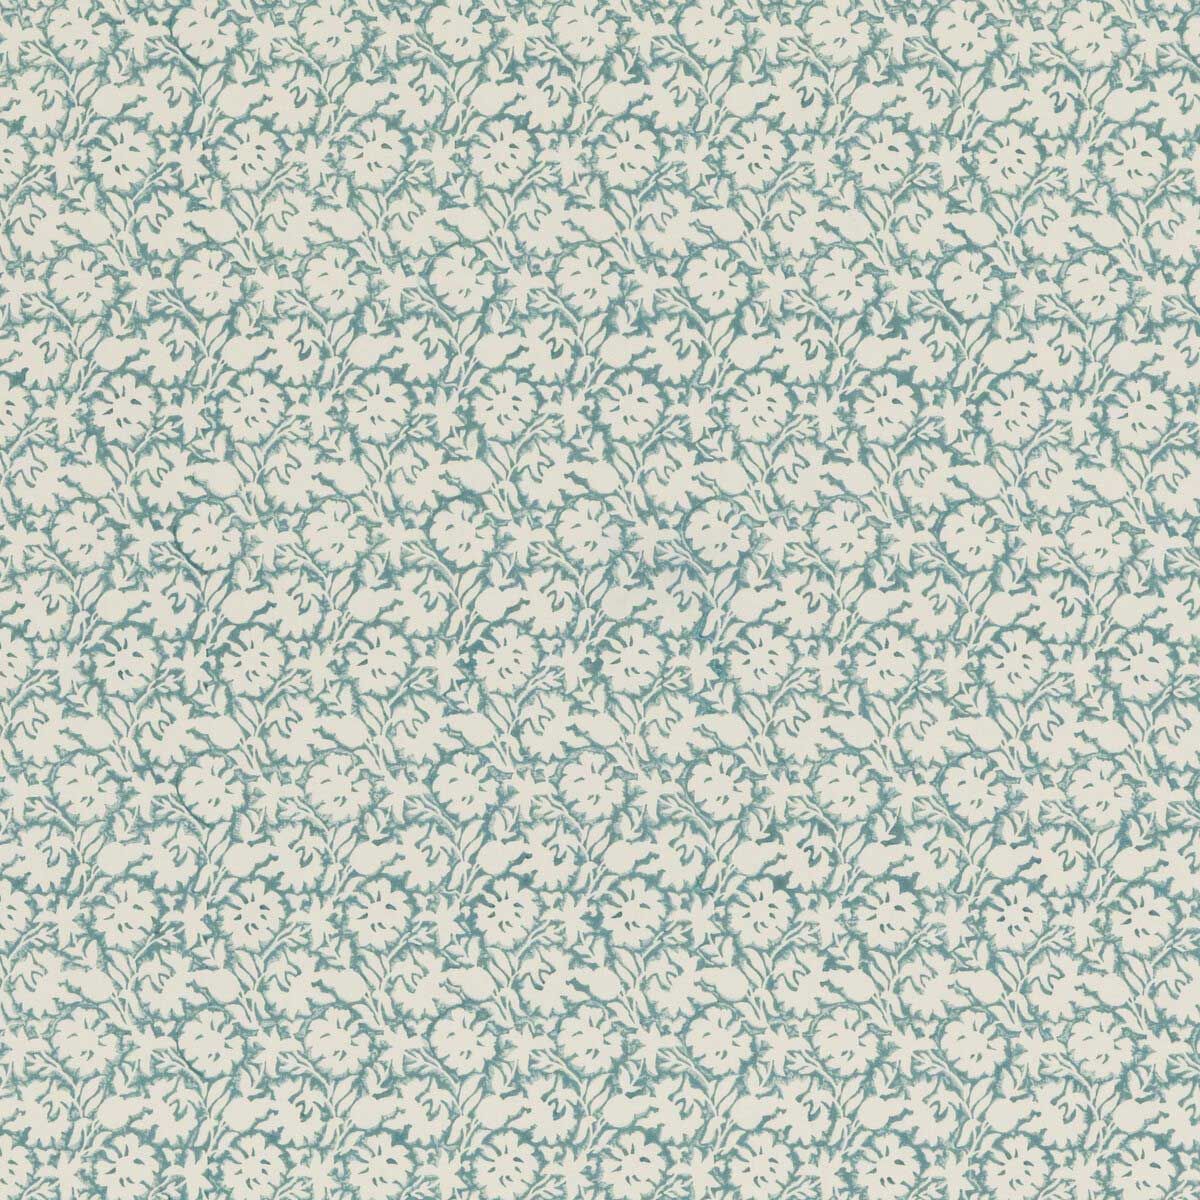 Flower Press Cotton Fabric in Aqua | Baker Lifestyle